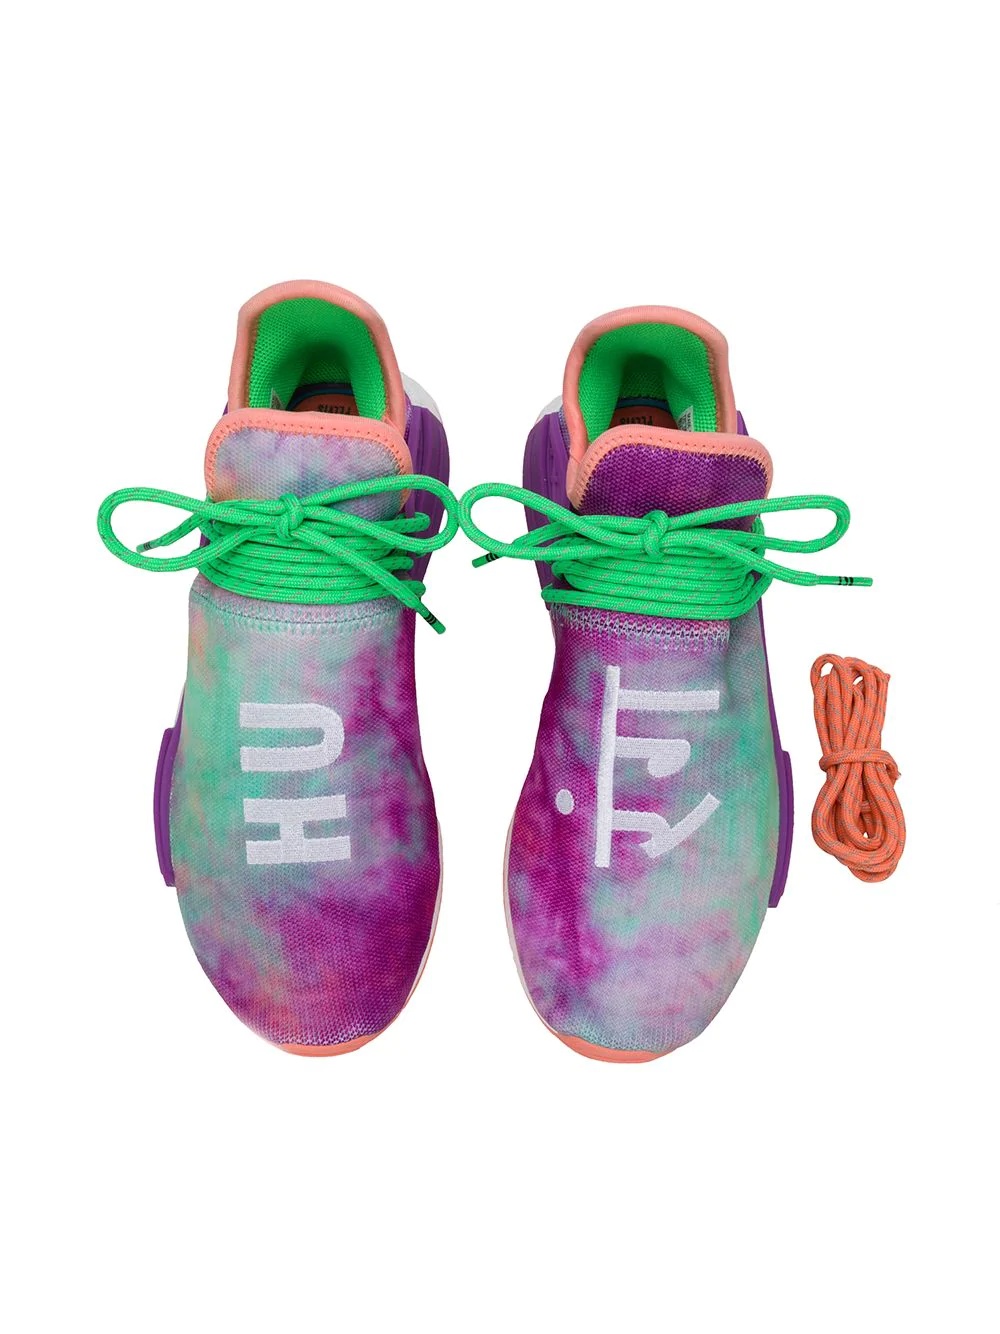 x Pharrell Williams tie-dye Holi Hu NMD sneakers - 4